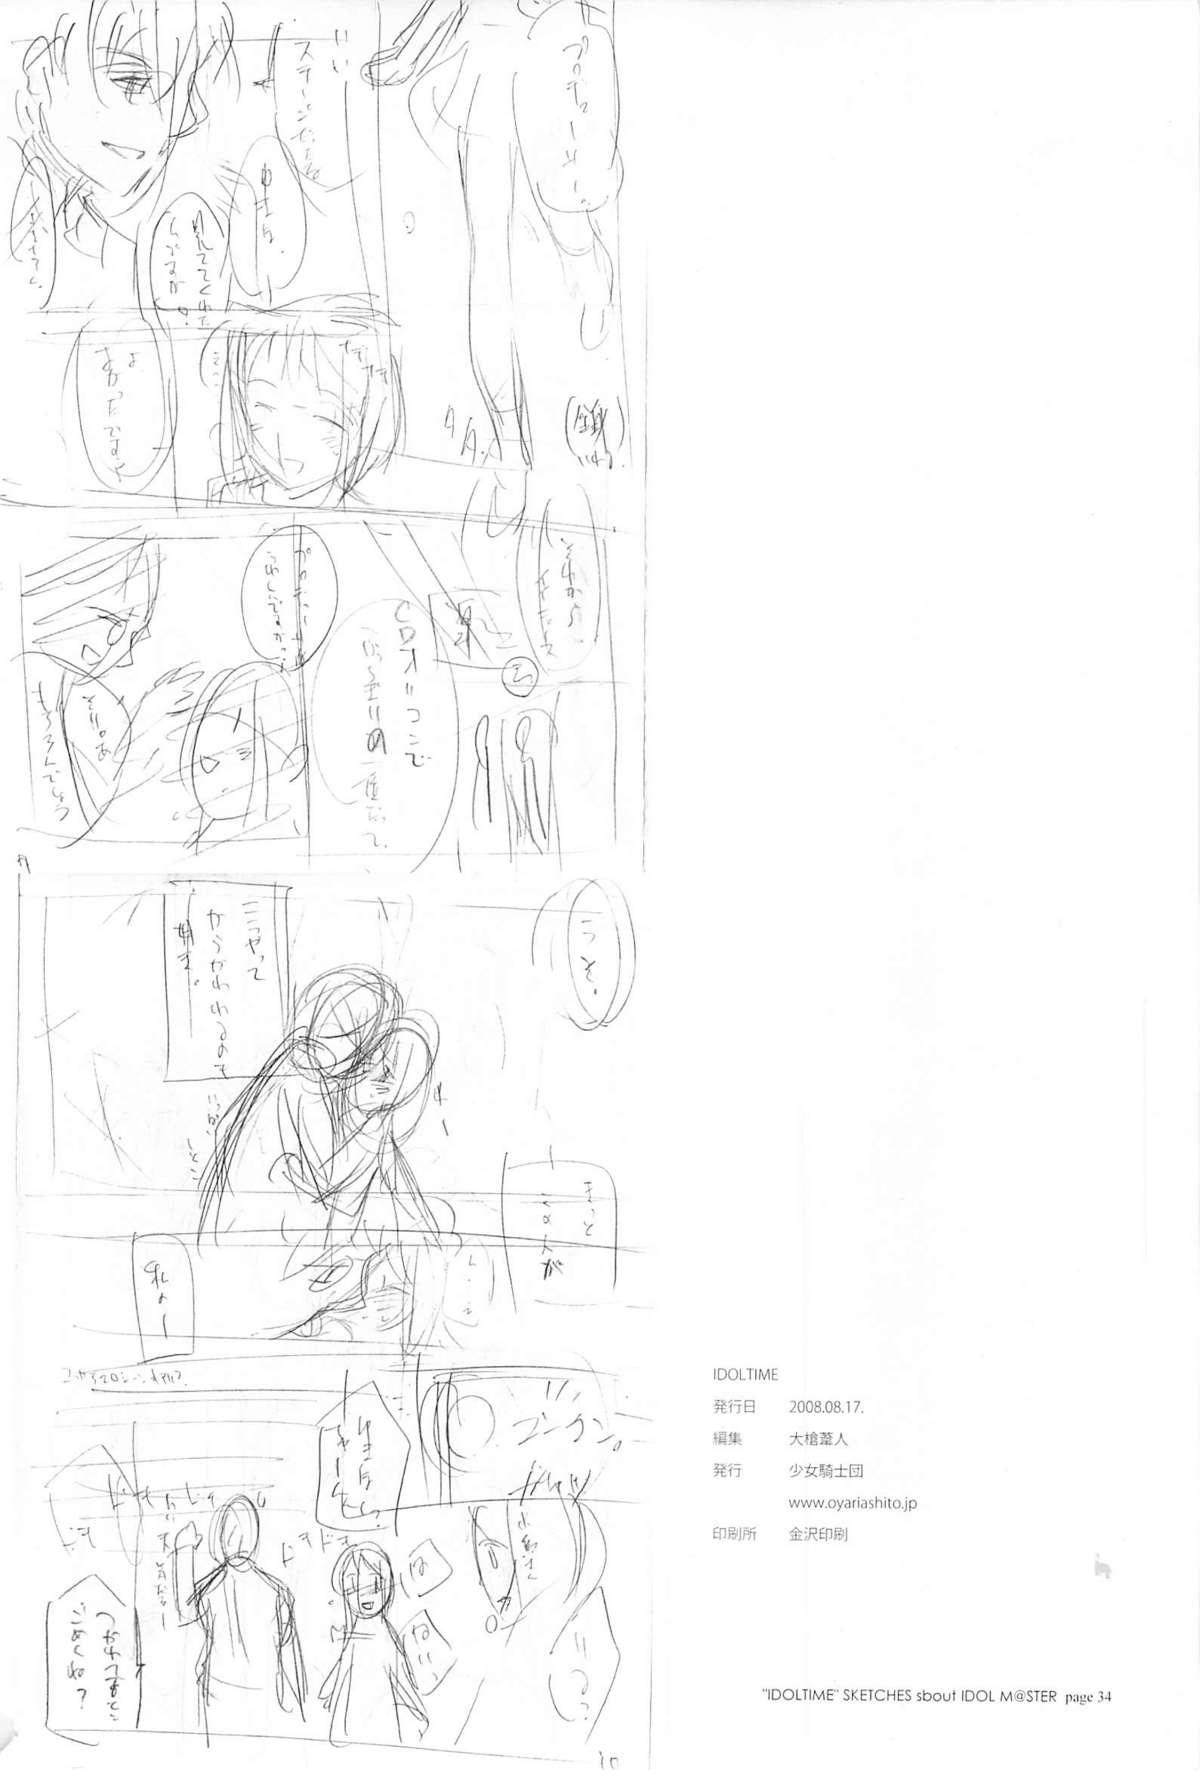 Brazil IDOLTIME featuring YUKIHO HAGIWARA - The idolmaster Cam - Page 33